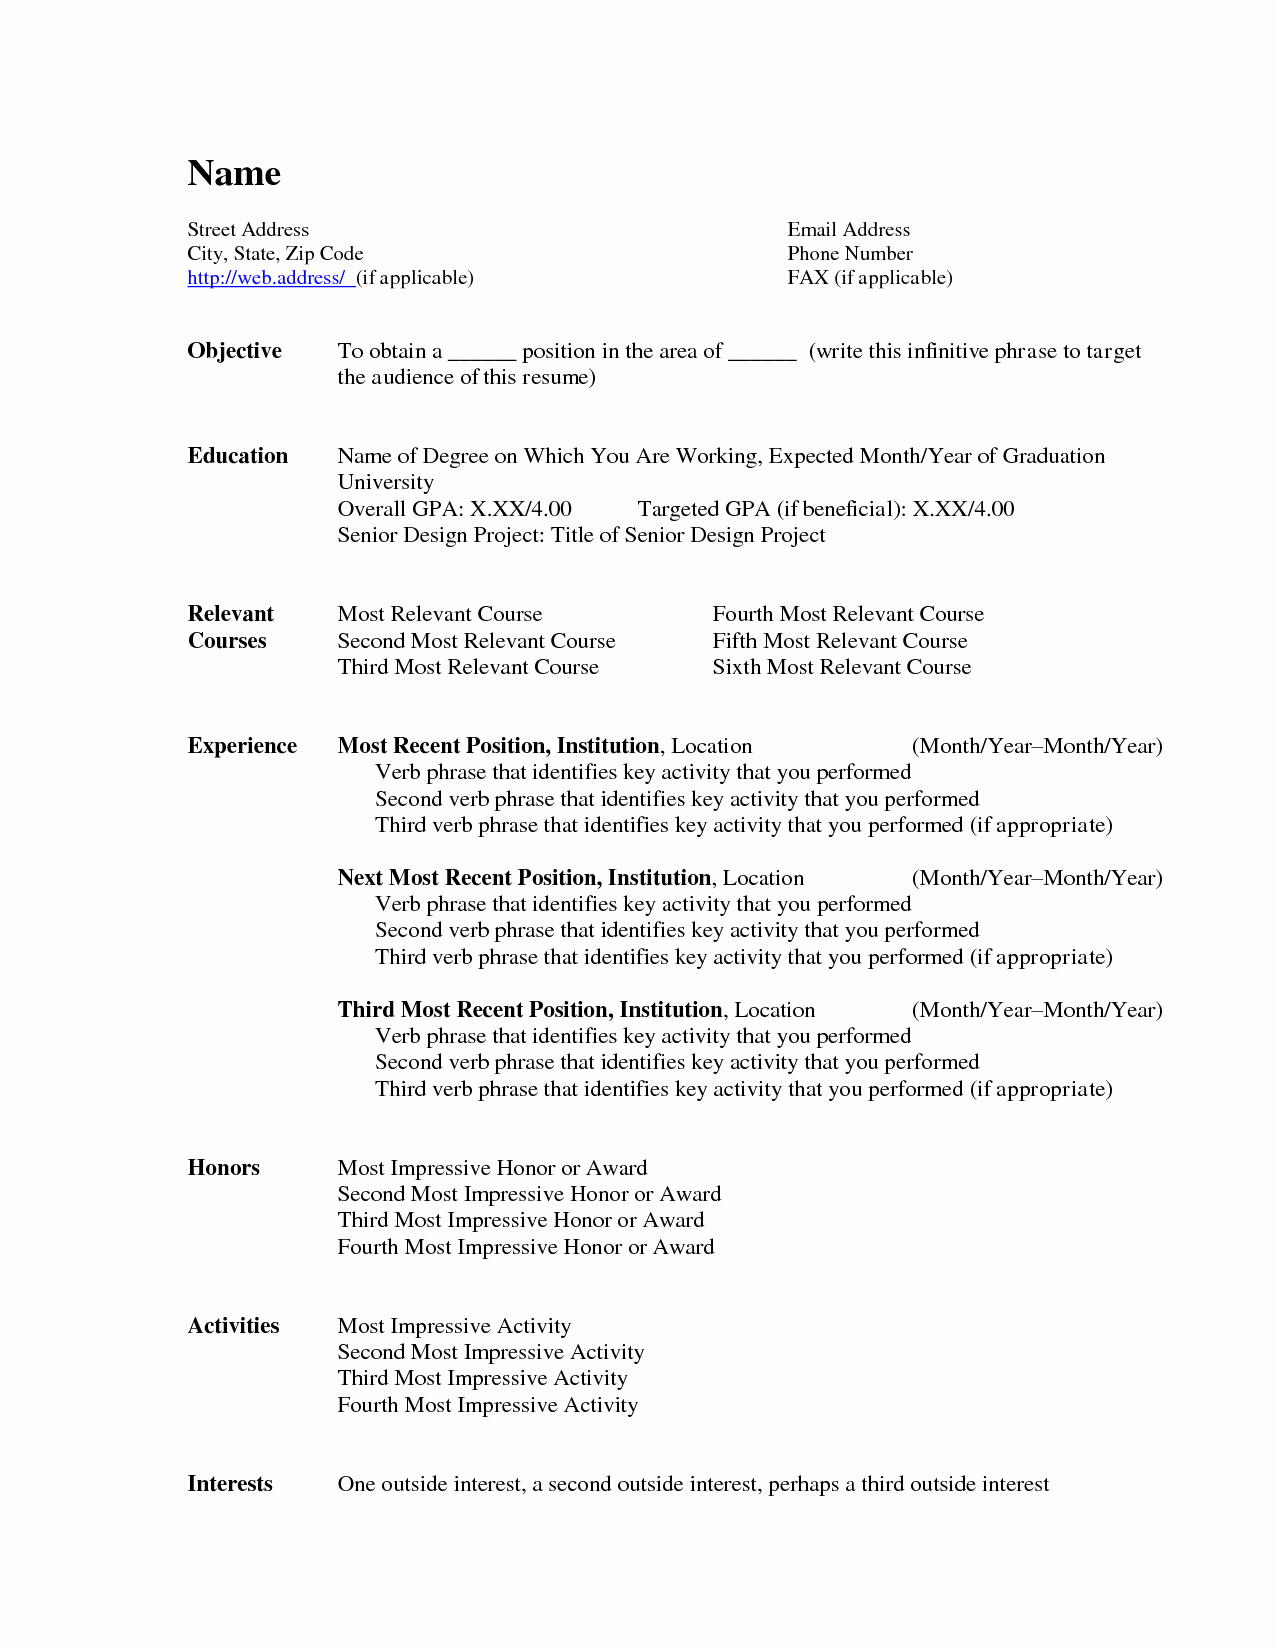 Professional Resume Template Microsoft Word Luxury is there A Resume Resumes Microsoft Word Popular Resume